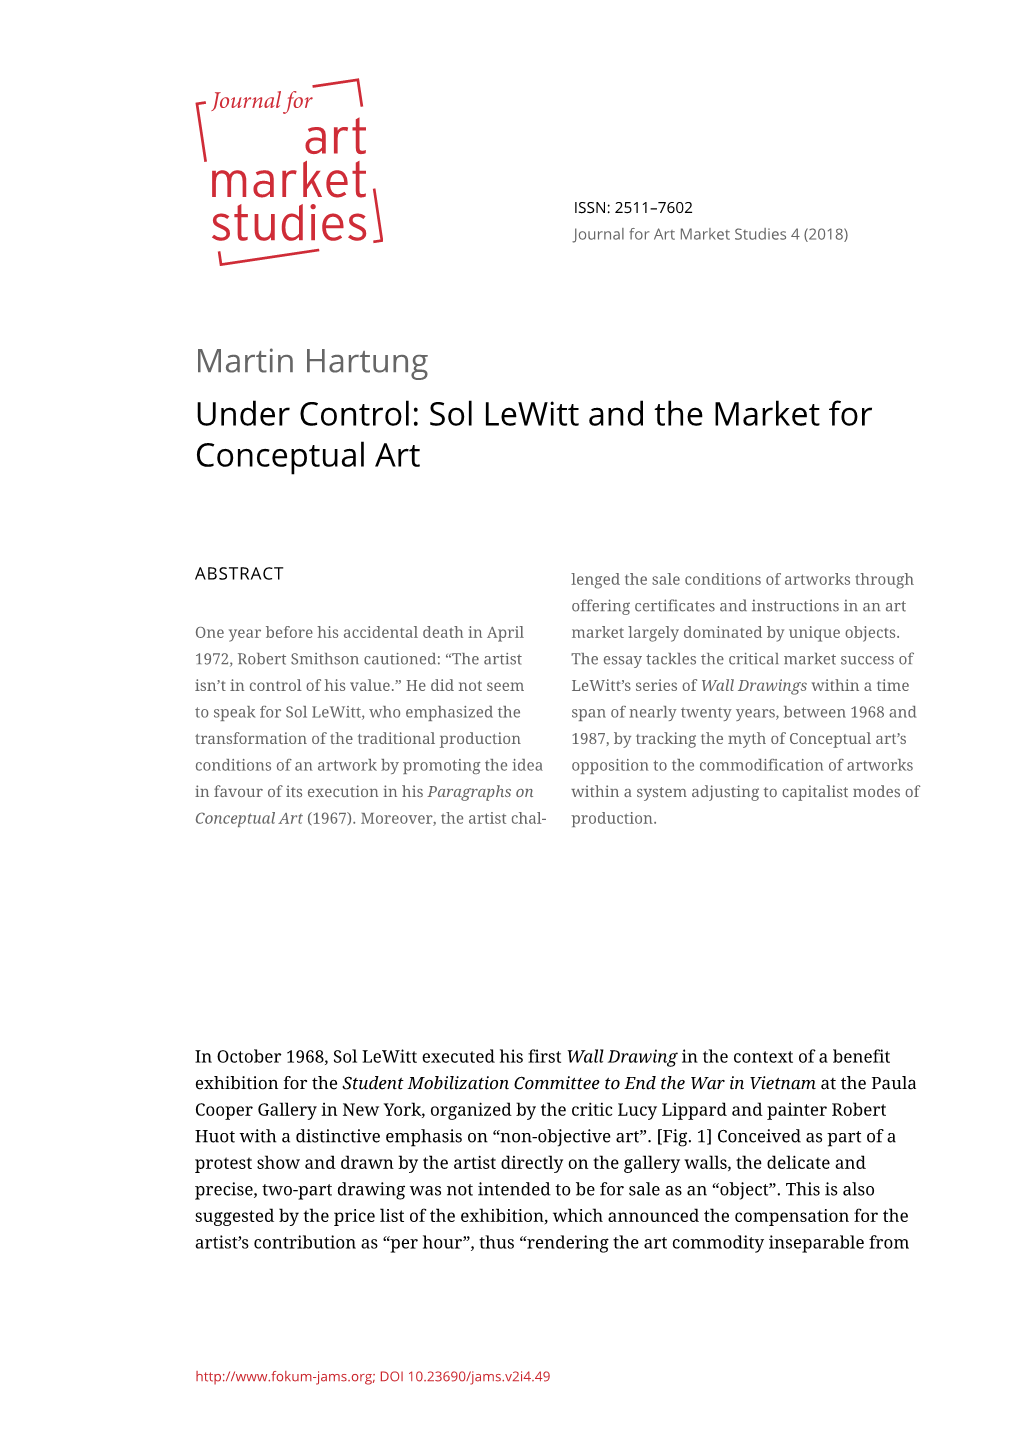 Martin Hartung Under Control: Sol Lewitt and the Market for Conceptual Art